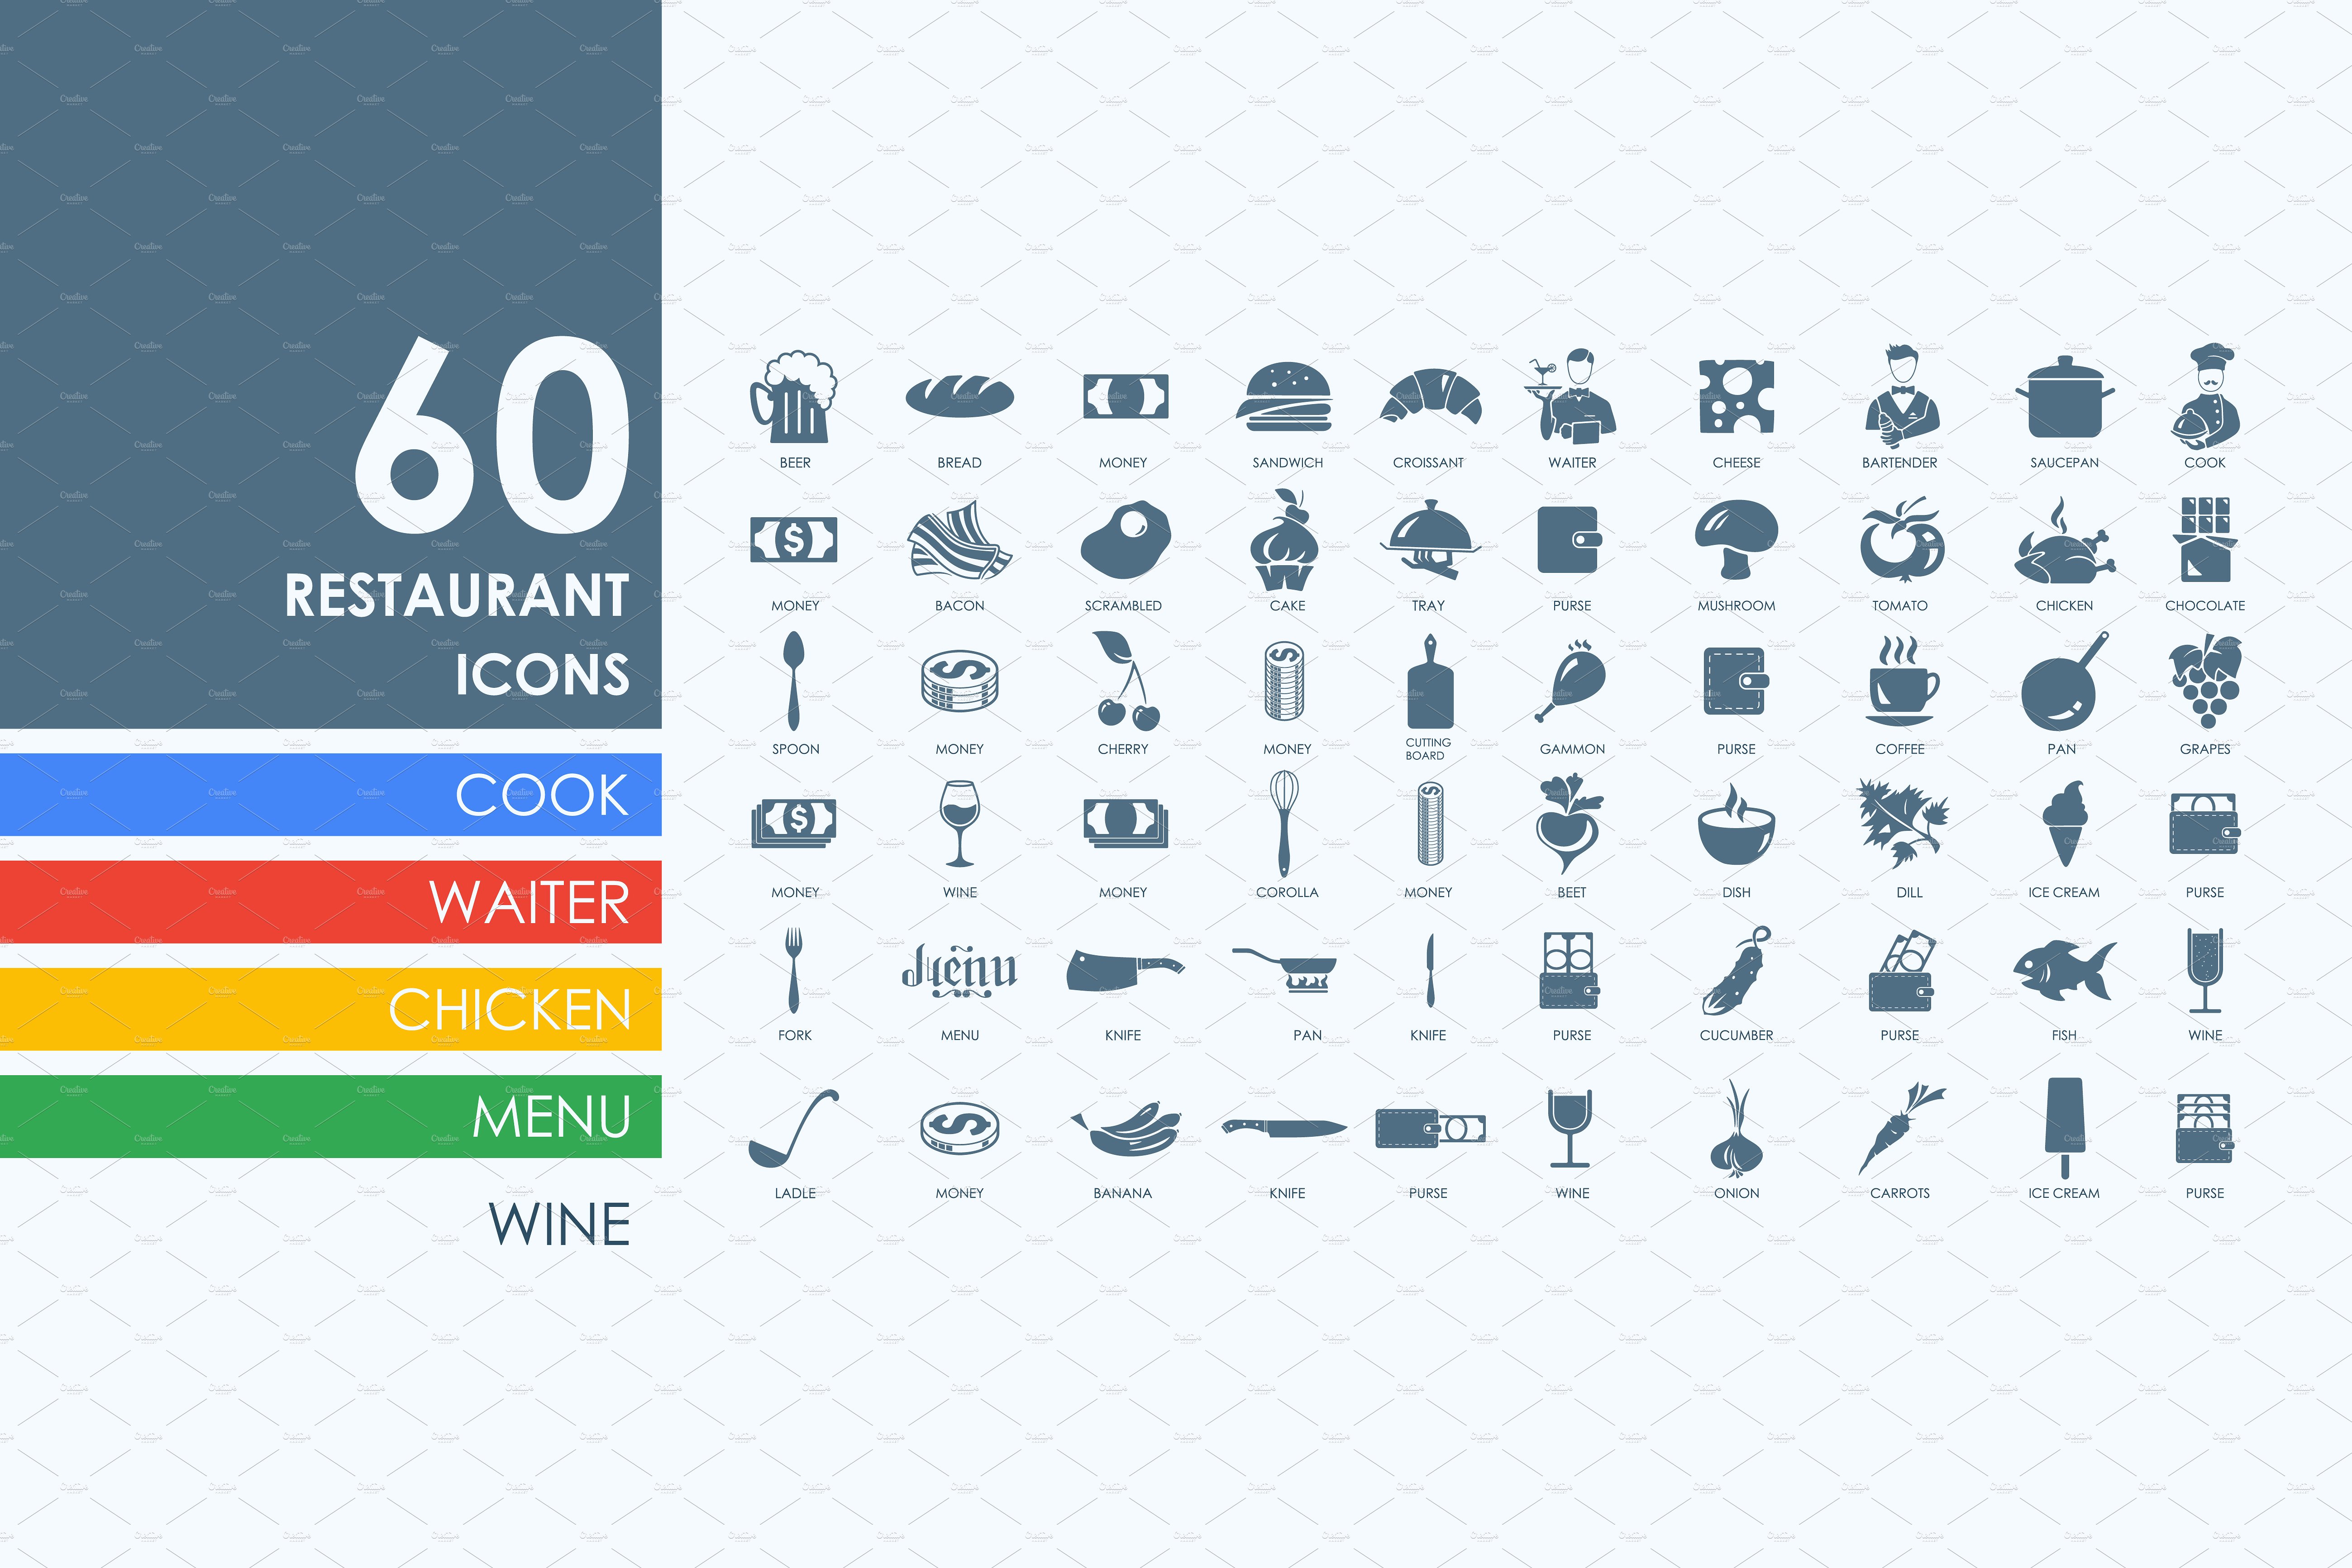 酒店常用的功能图标 60 restaurant icons